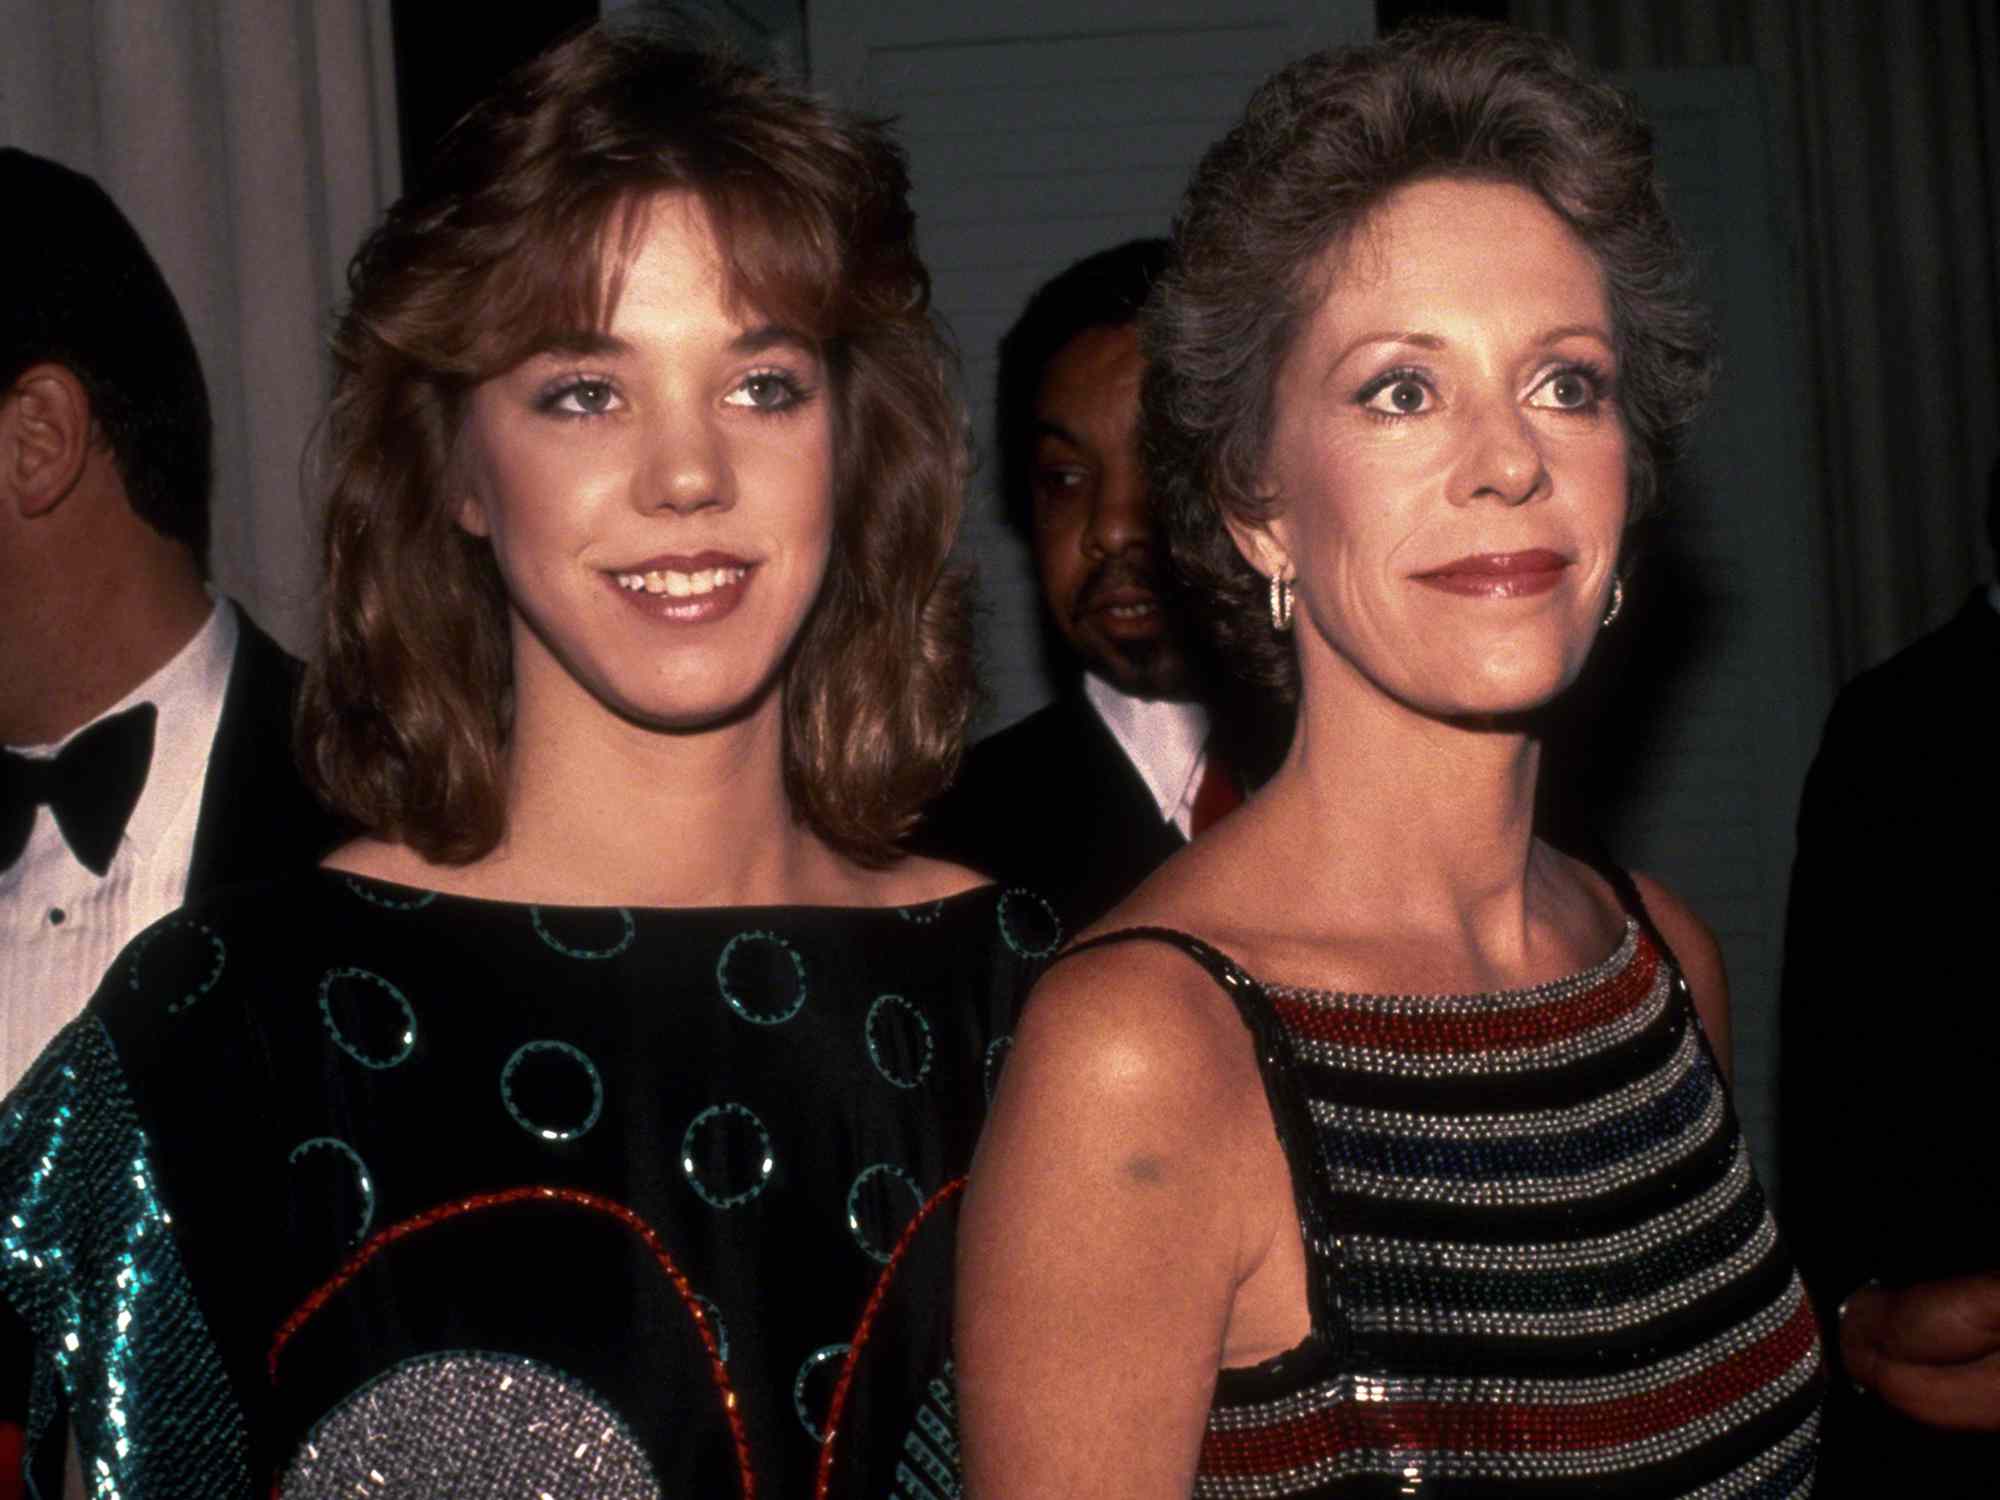 Carol Burnett with daughter Carrie Hamilton circa 1983 in New York City.